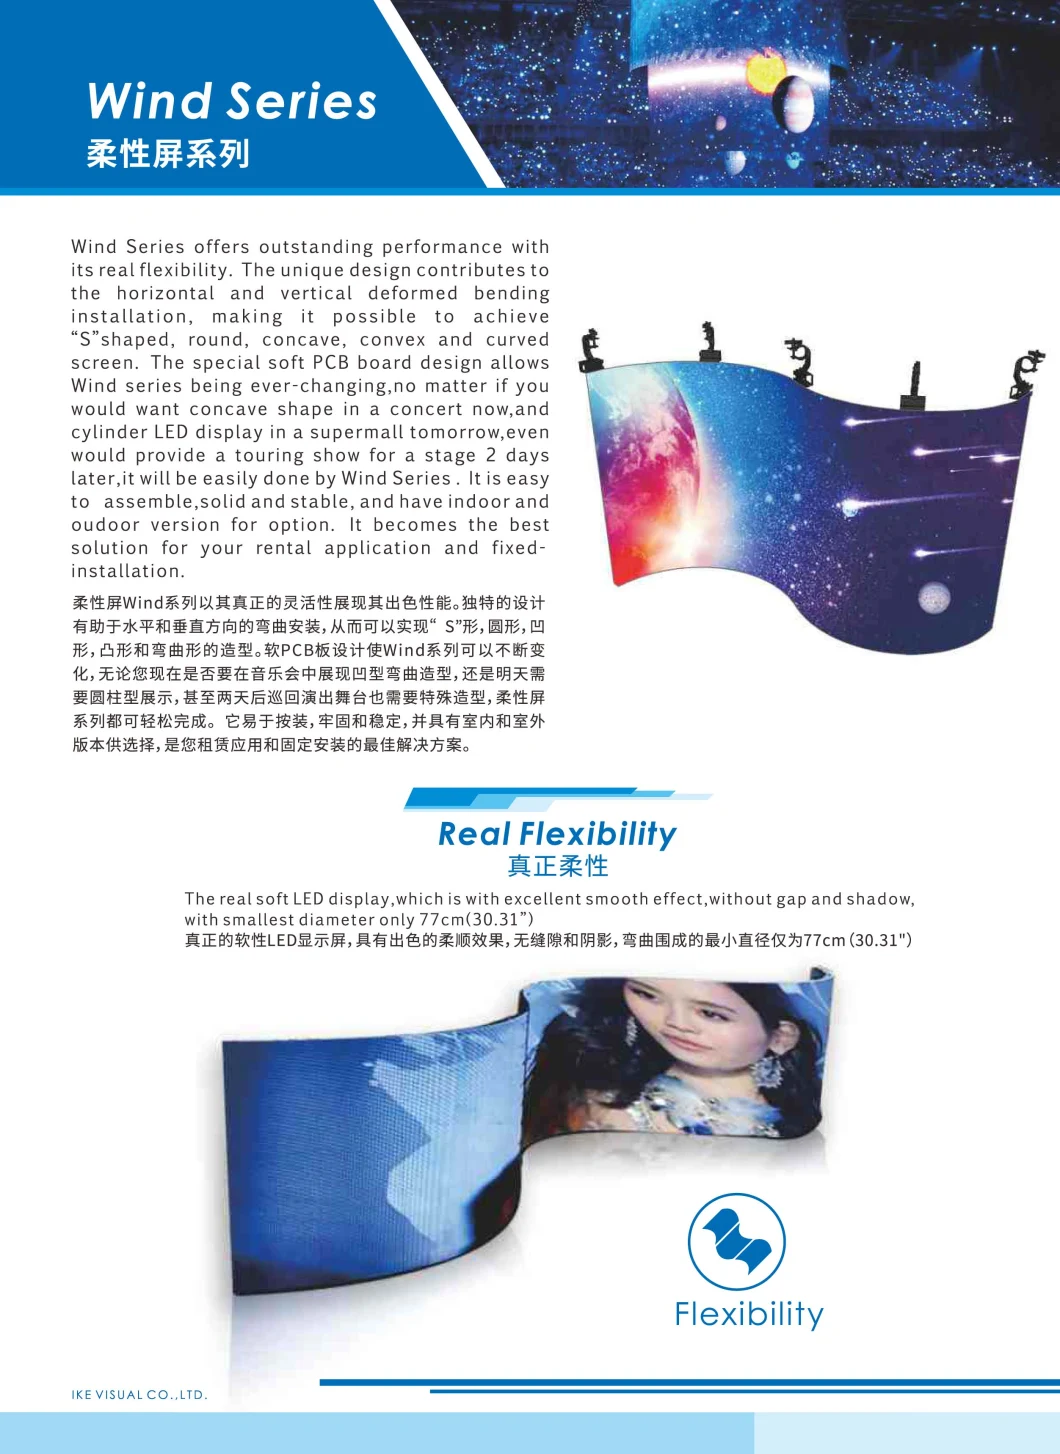 HD Video Outdoor Digital Flexible LED Display Board with Ultra Flexibility LED Digital Display